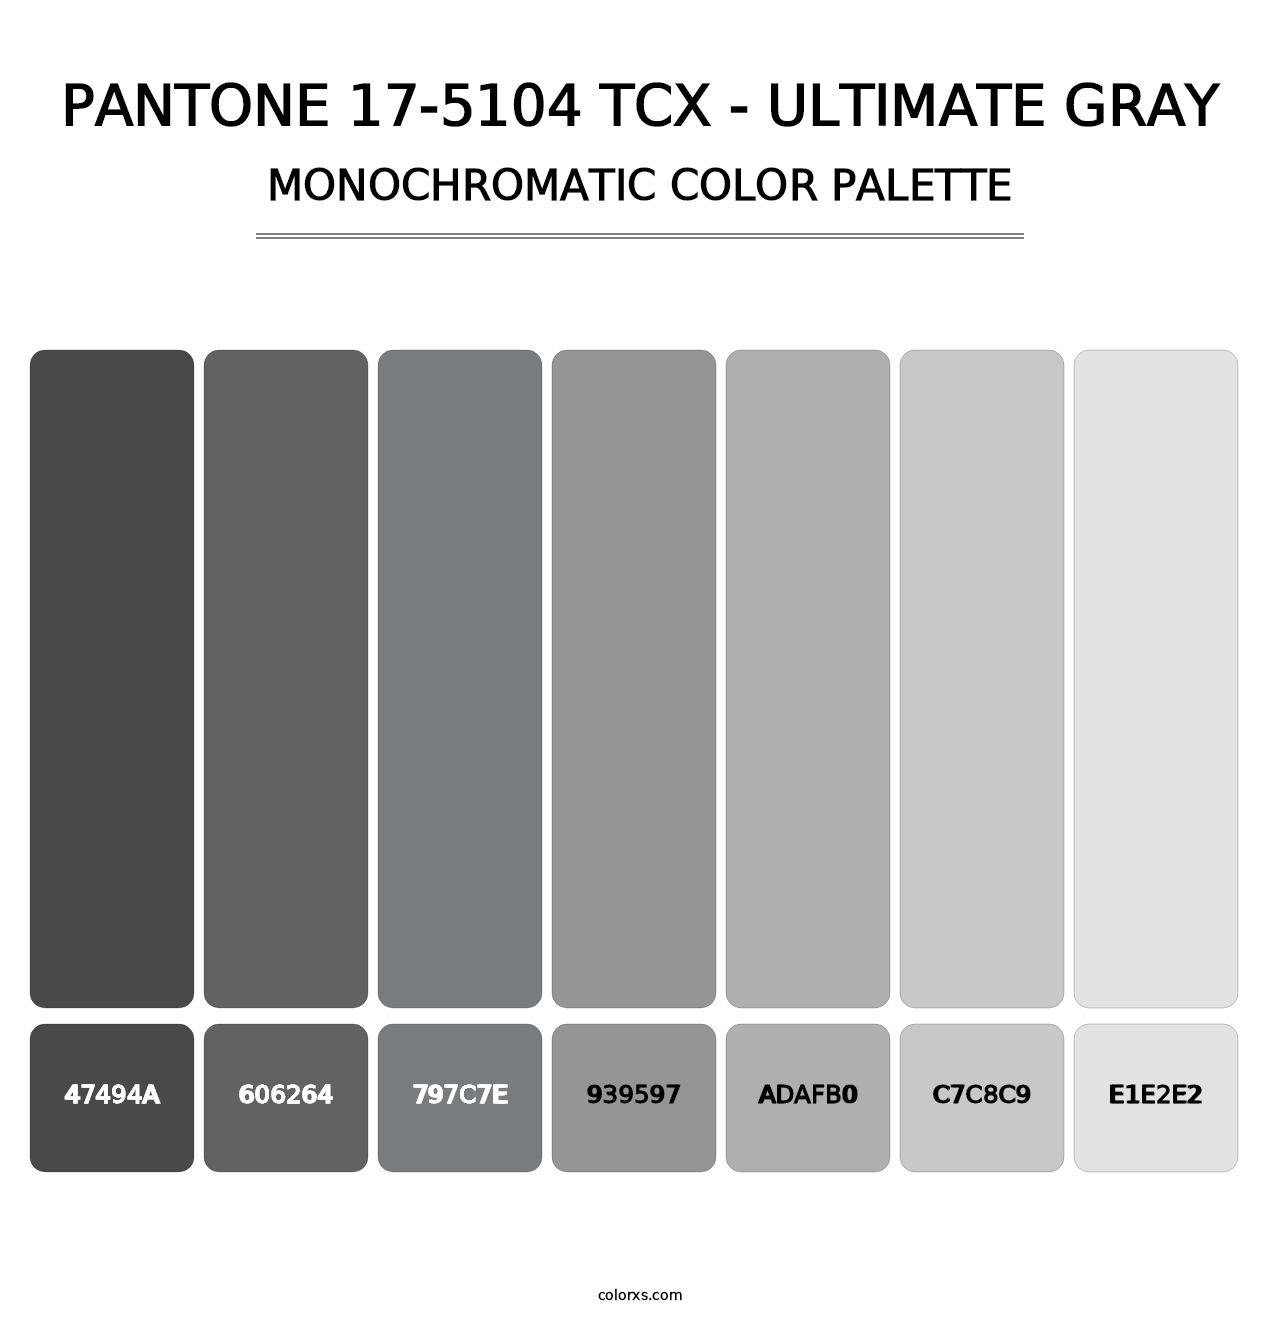 PANTONE 17-5104 TCX - Ultimate Gray - Monochromatic Color Palette